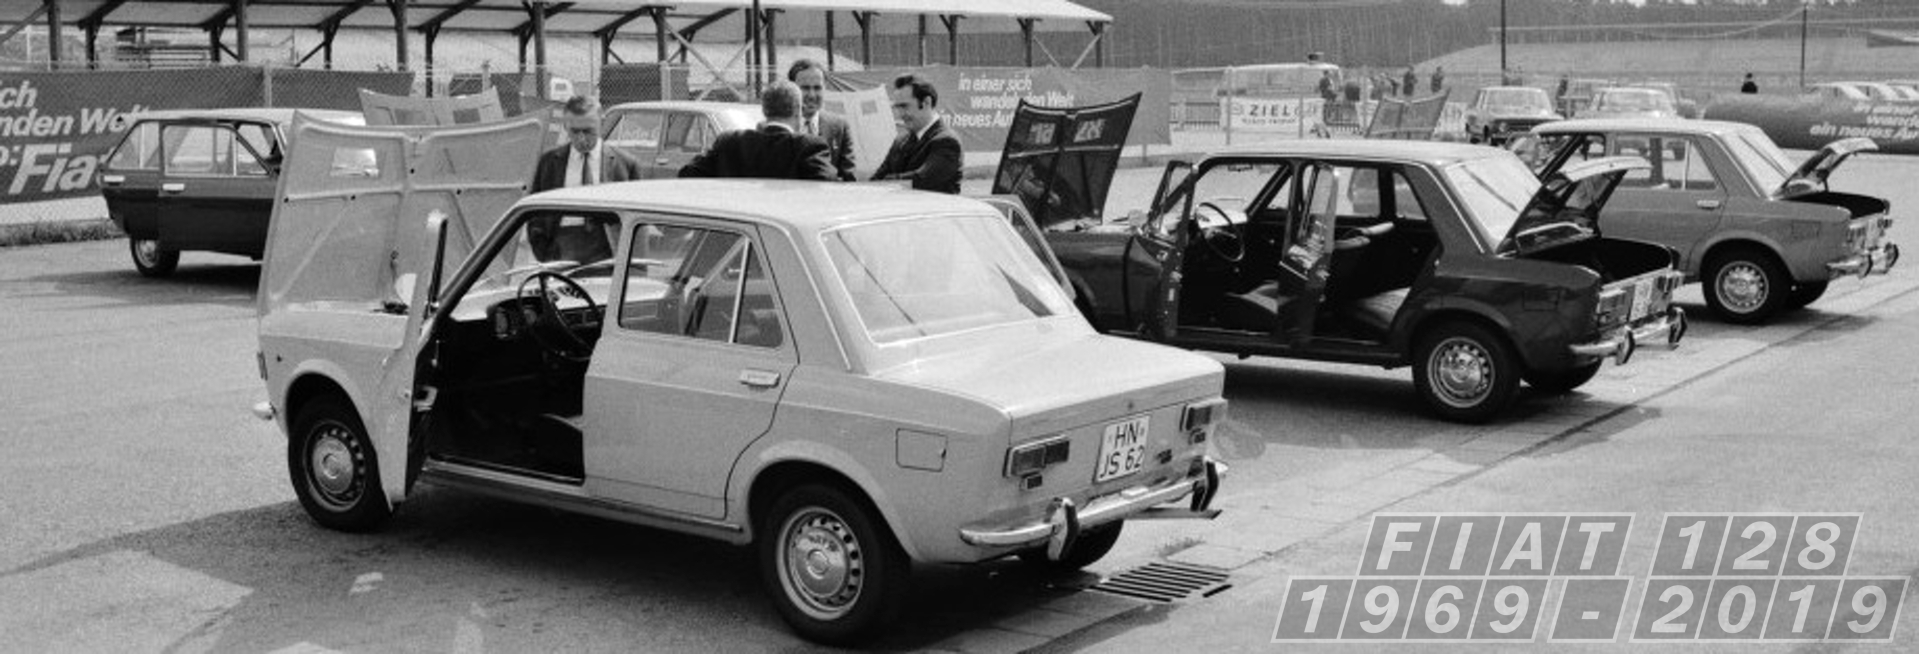 1969 08 28 Cars Parked at Hockenheim 2 2 vz